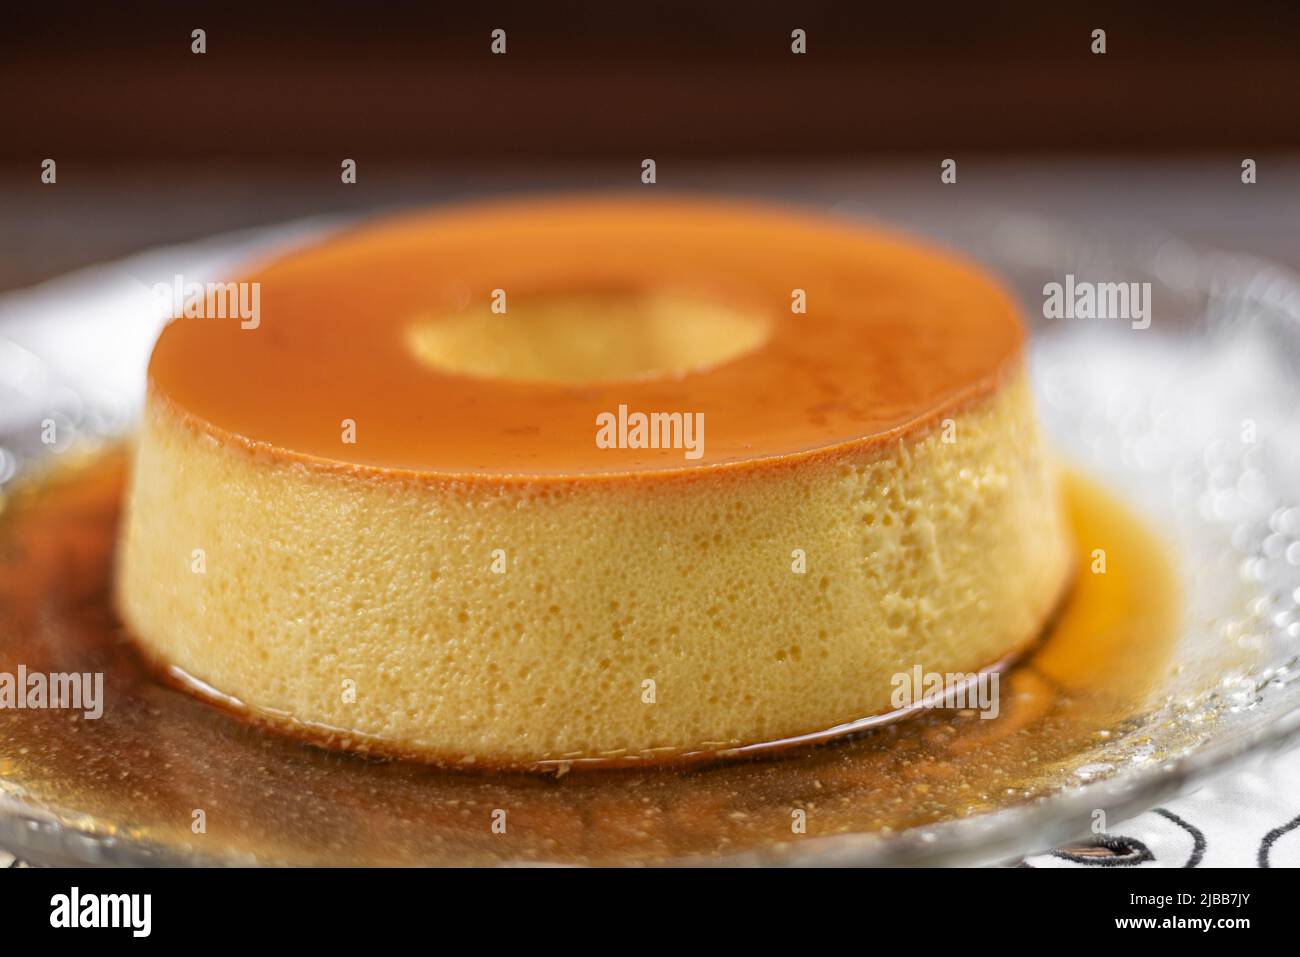 https://c8.alamy.com/comp/2JBB7JY/milk-pudding-or-pudim-de-leite-brazilian-dessert-homemade-caramel-custard-pudding-traditional-brazilian-flan-on-wooden-background-2JBB7JY.jpg